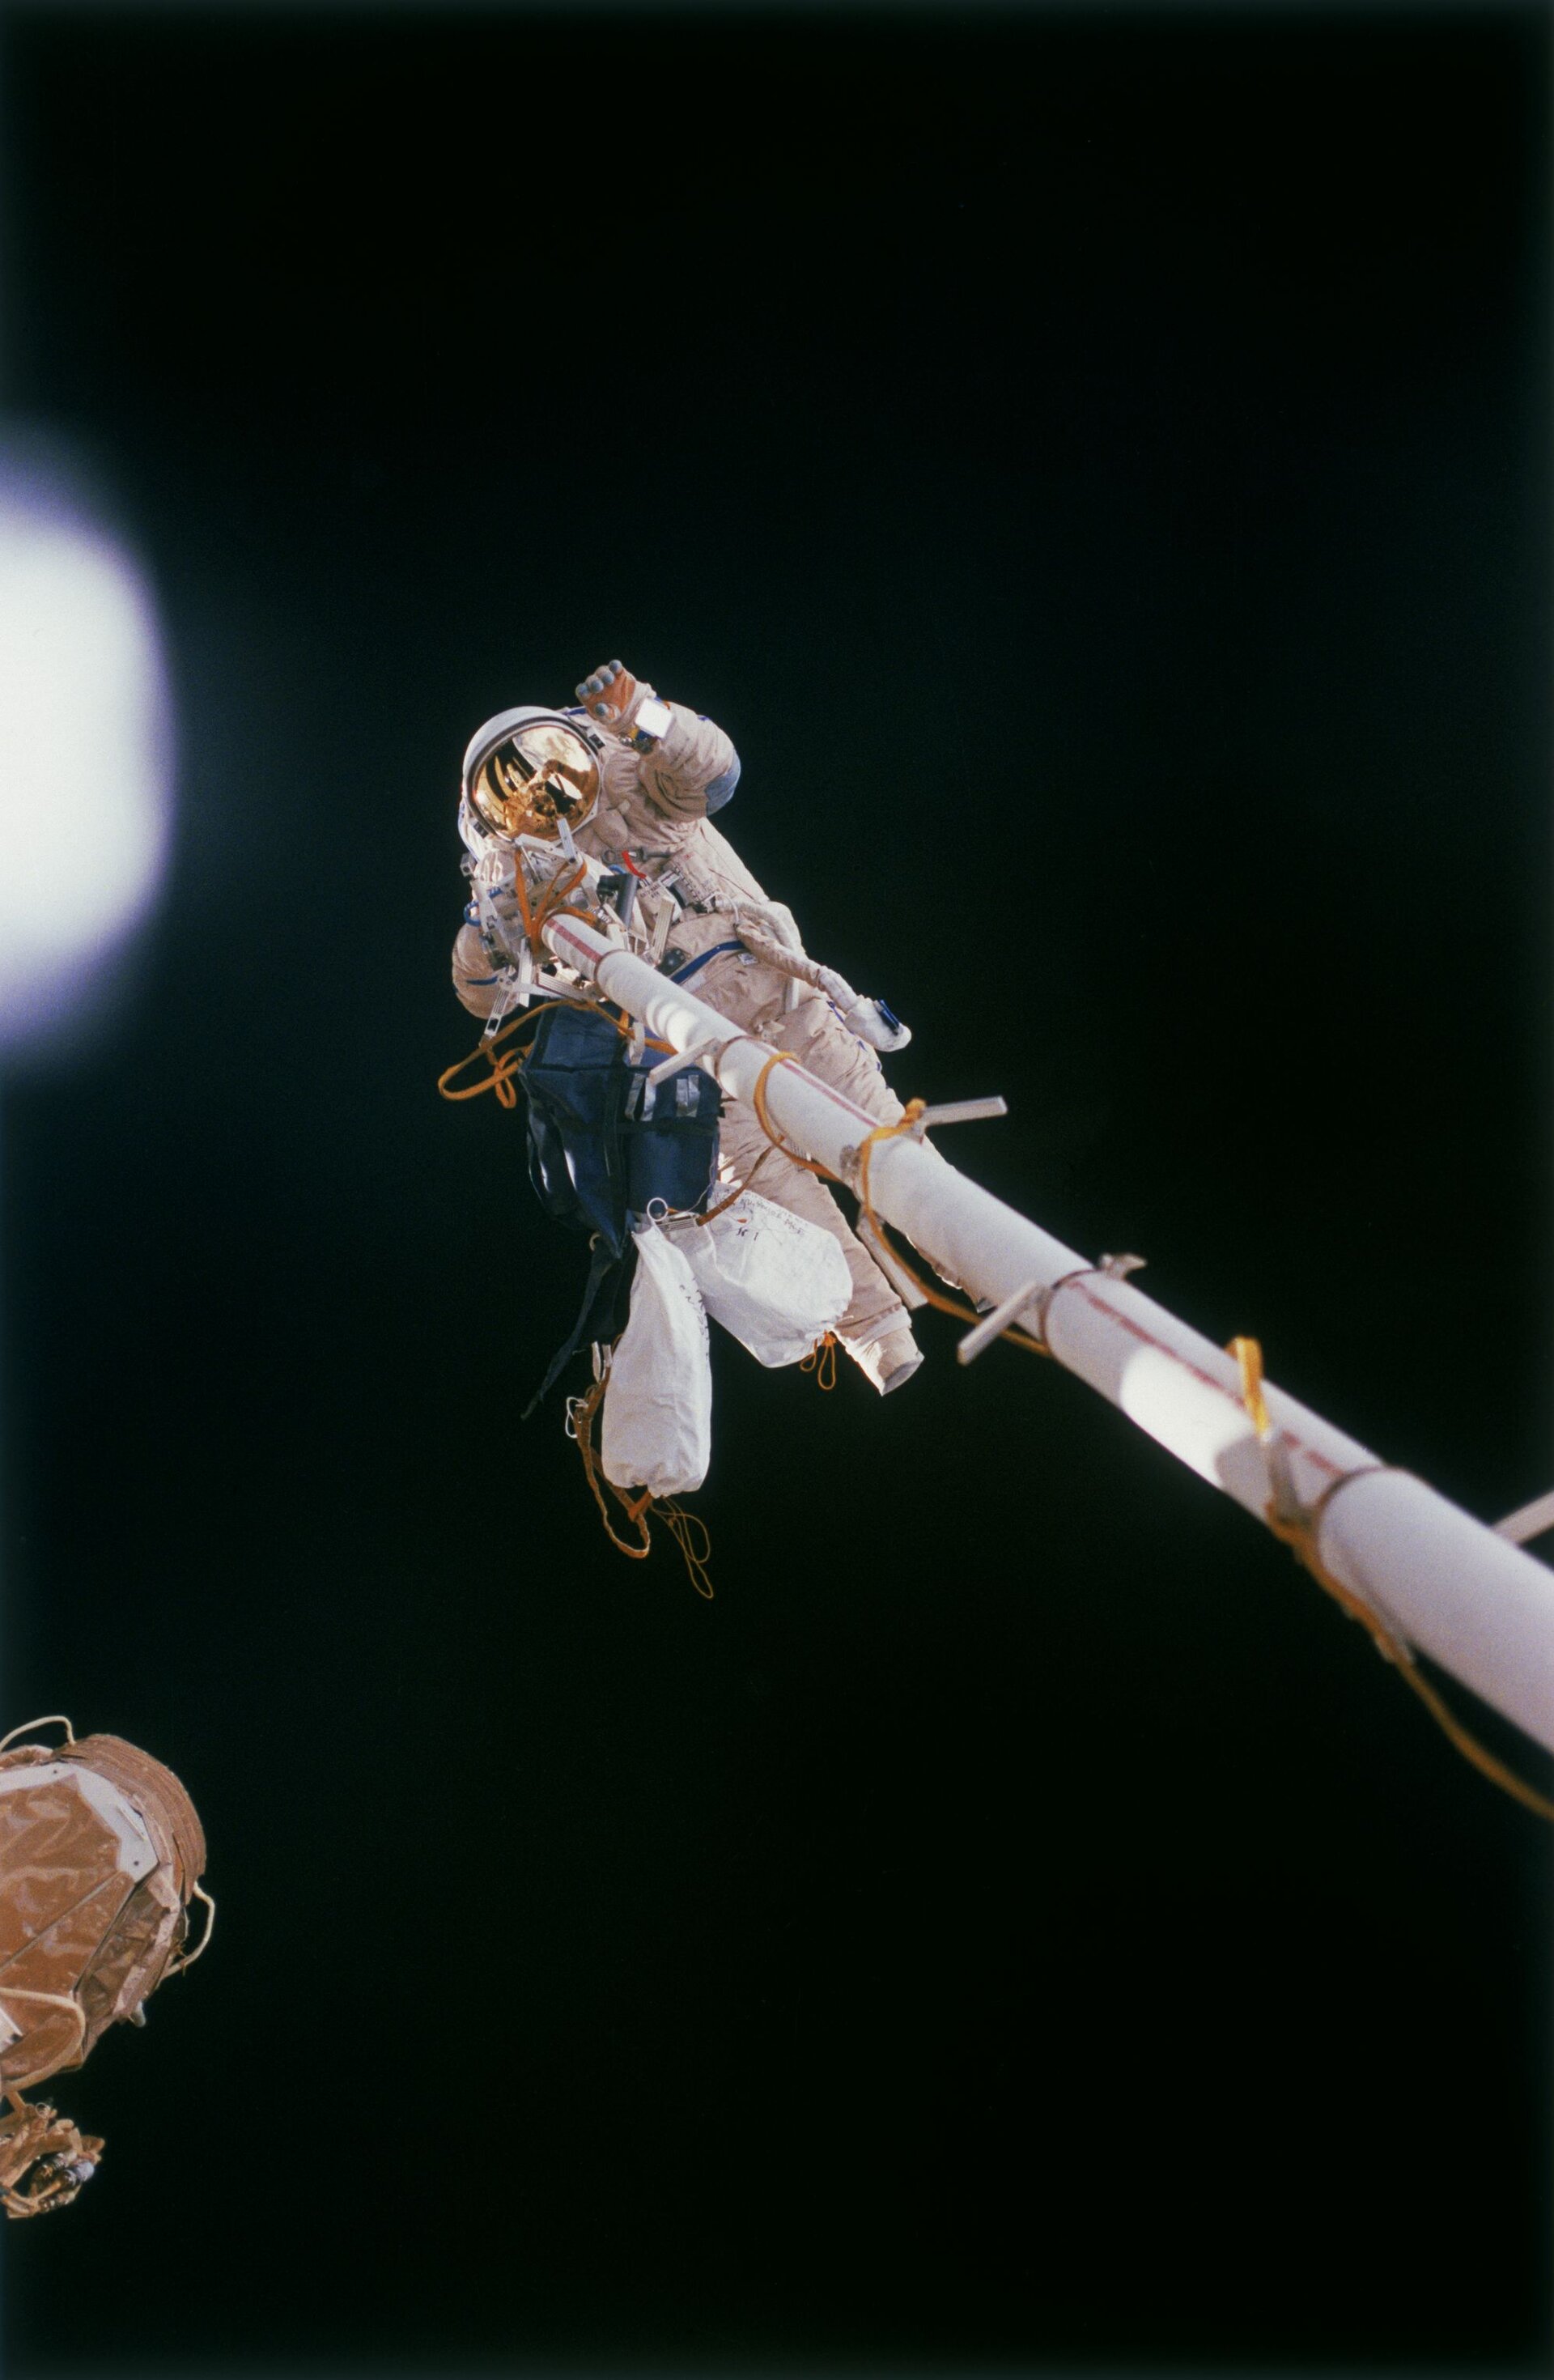 The first spacewalk for an ESA astronaut took place during Euromir 95